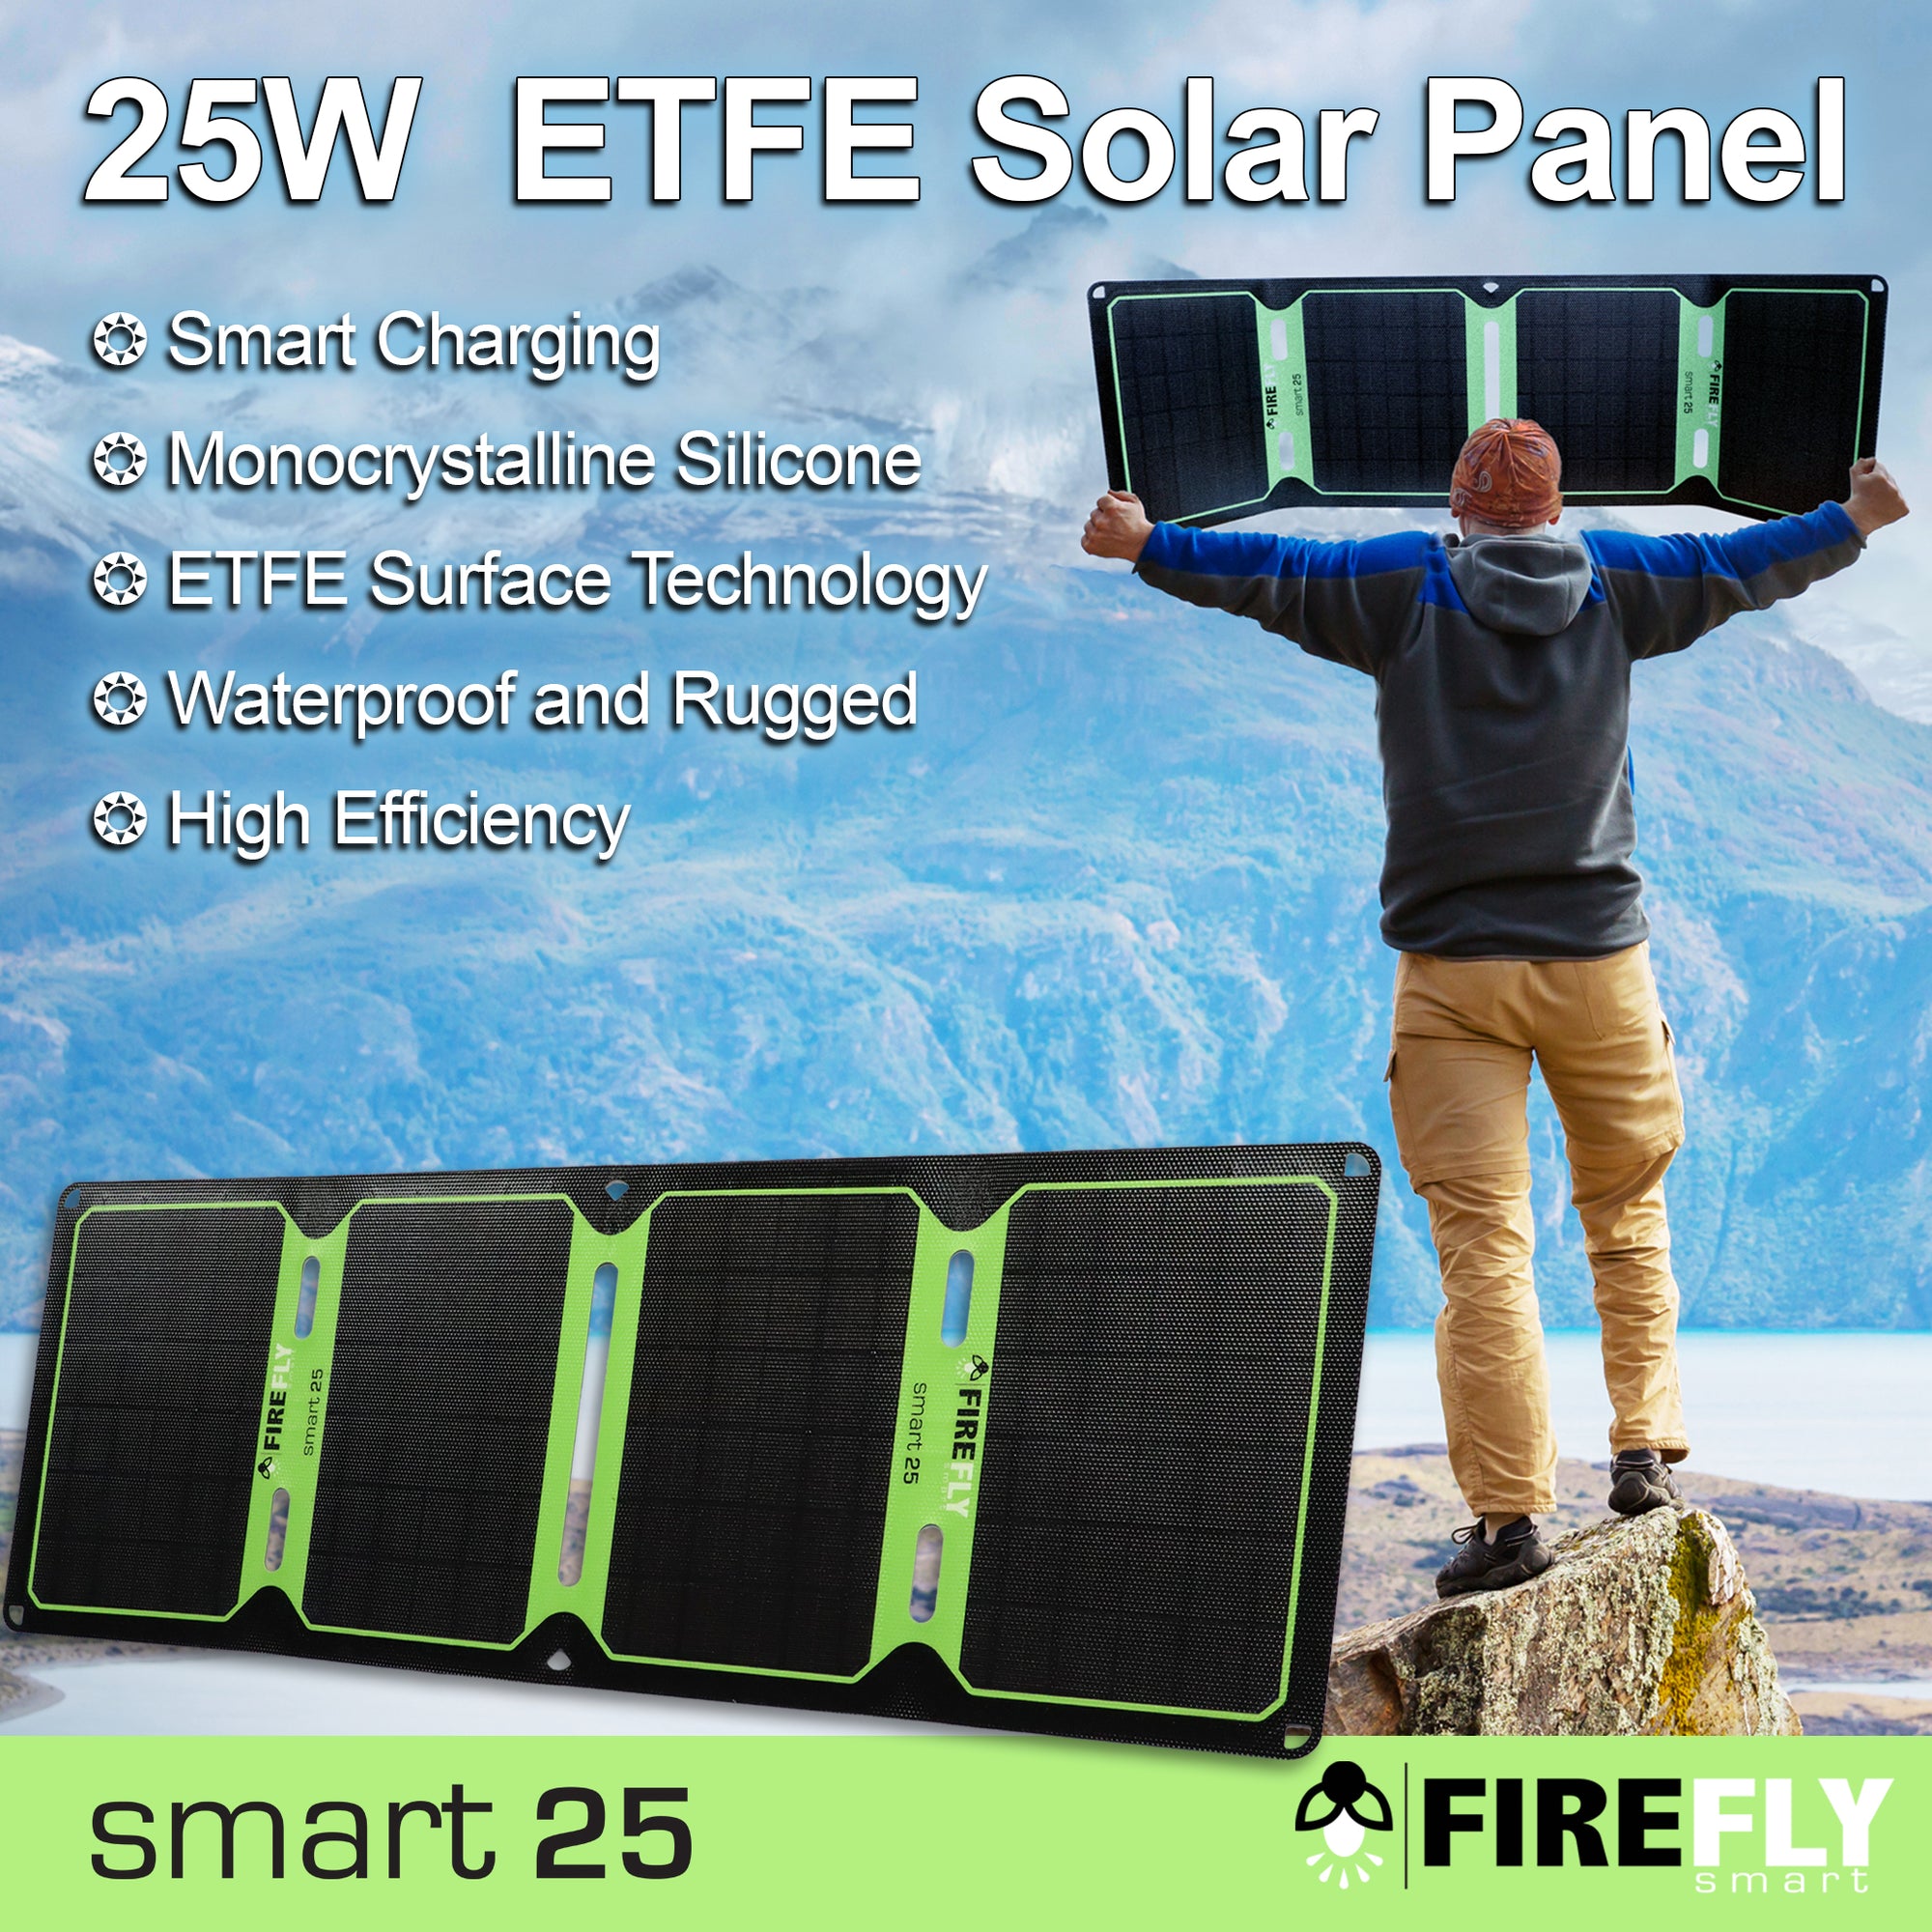 SMART 25 ETFE SOLAR PANEL